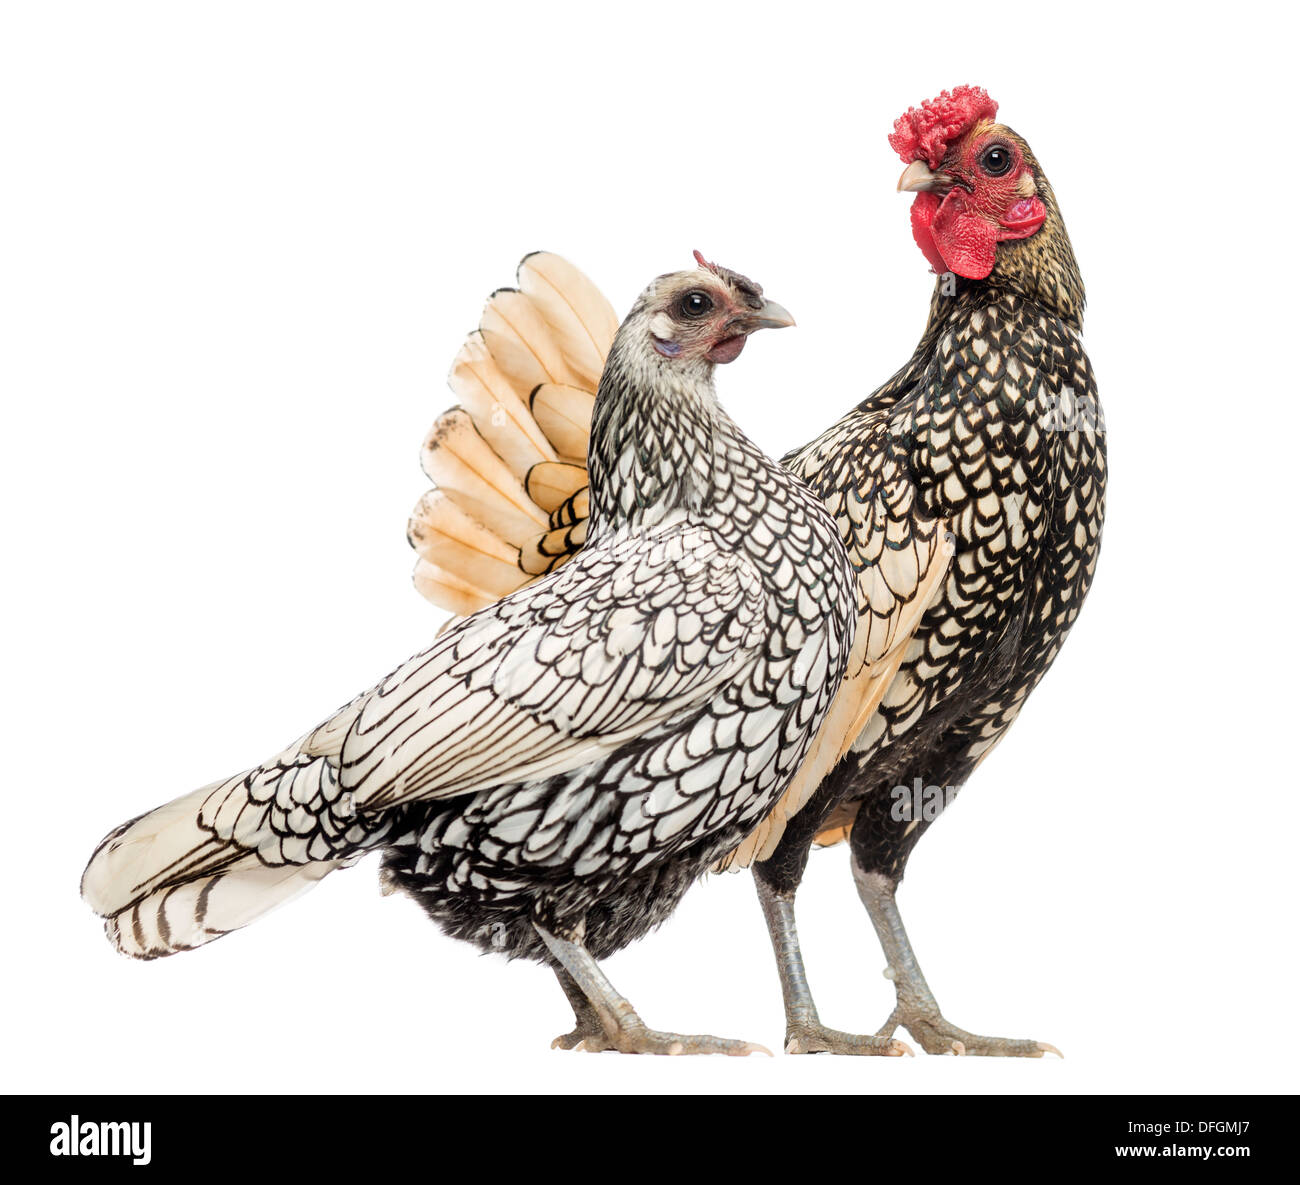 Golden Sebright Bantam rooster and silver Sebright bantam hen in front of white background Stock Photo